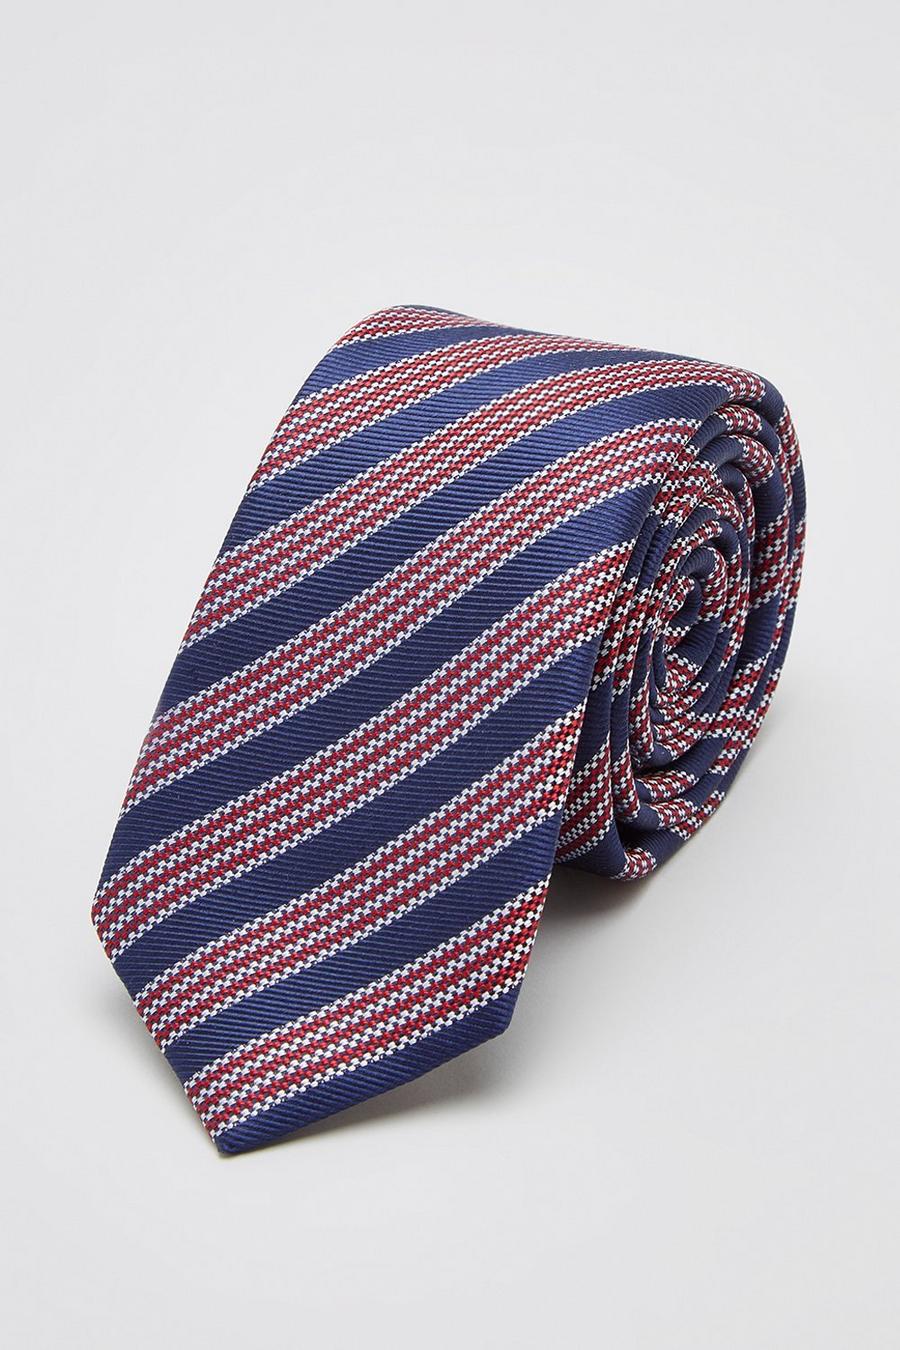 Ben Sherman Navy House Stripe Tie